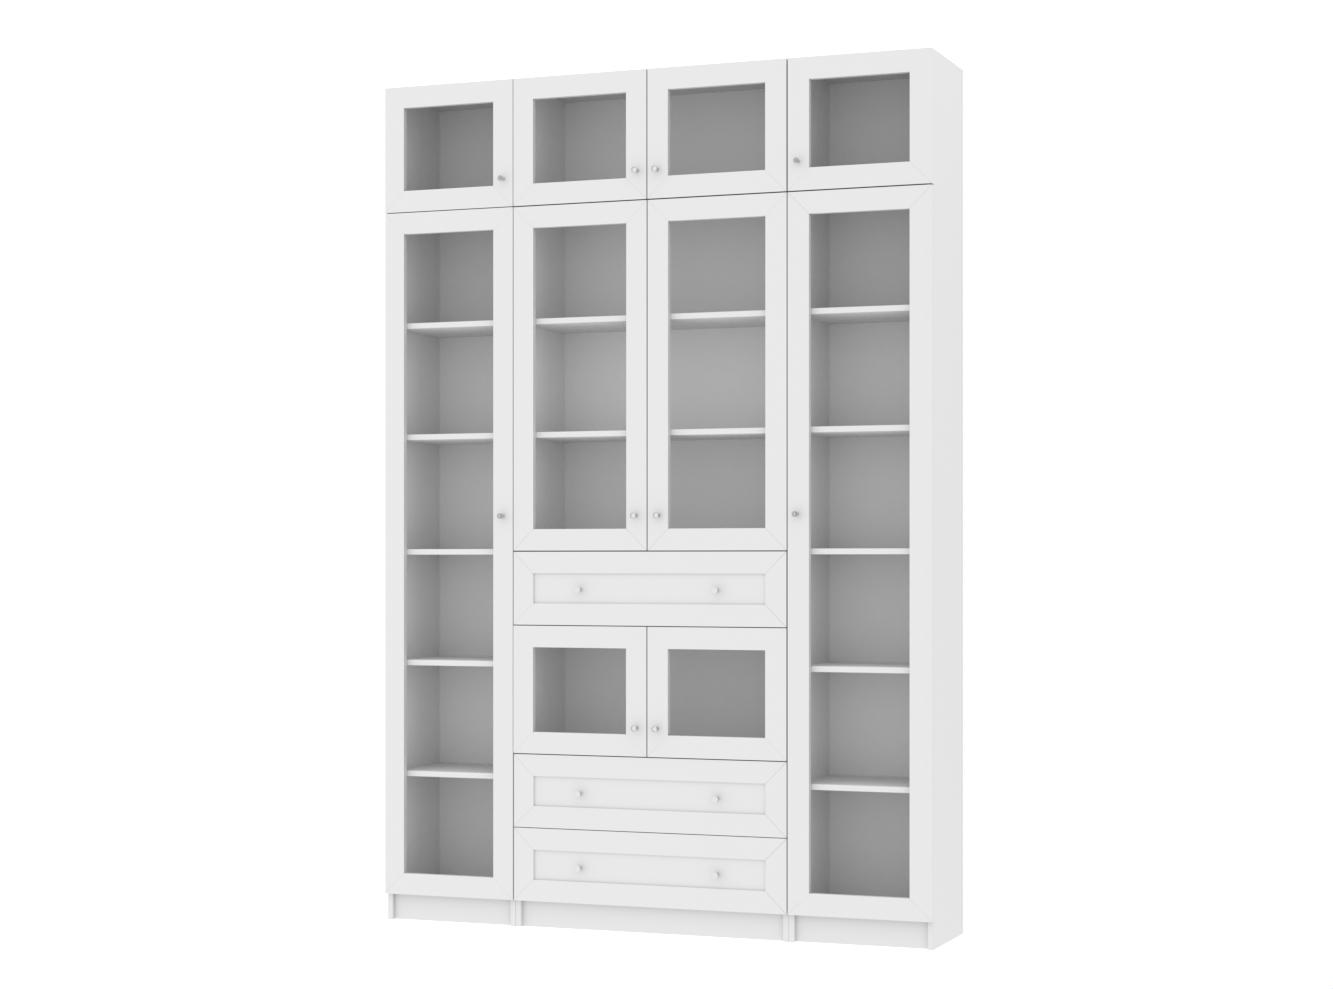  Книжный шкаф Билли 364 white ИКЕА (IKEA) изображение товара